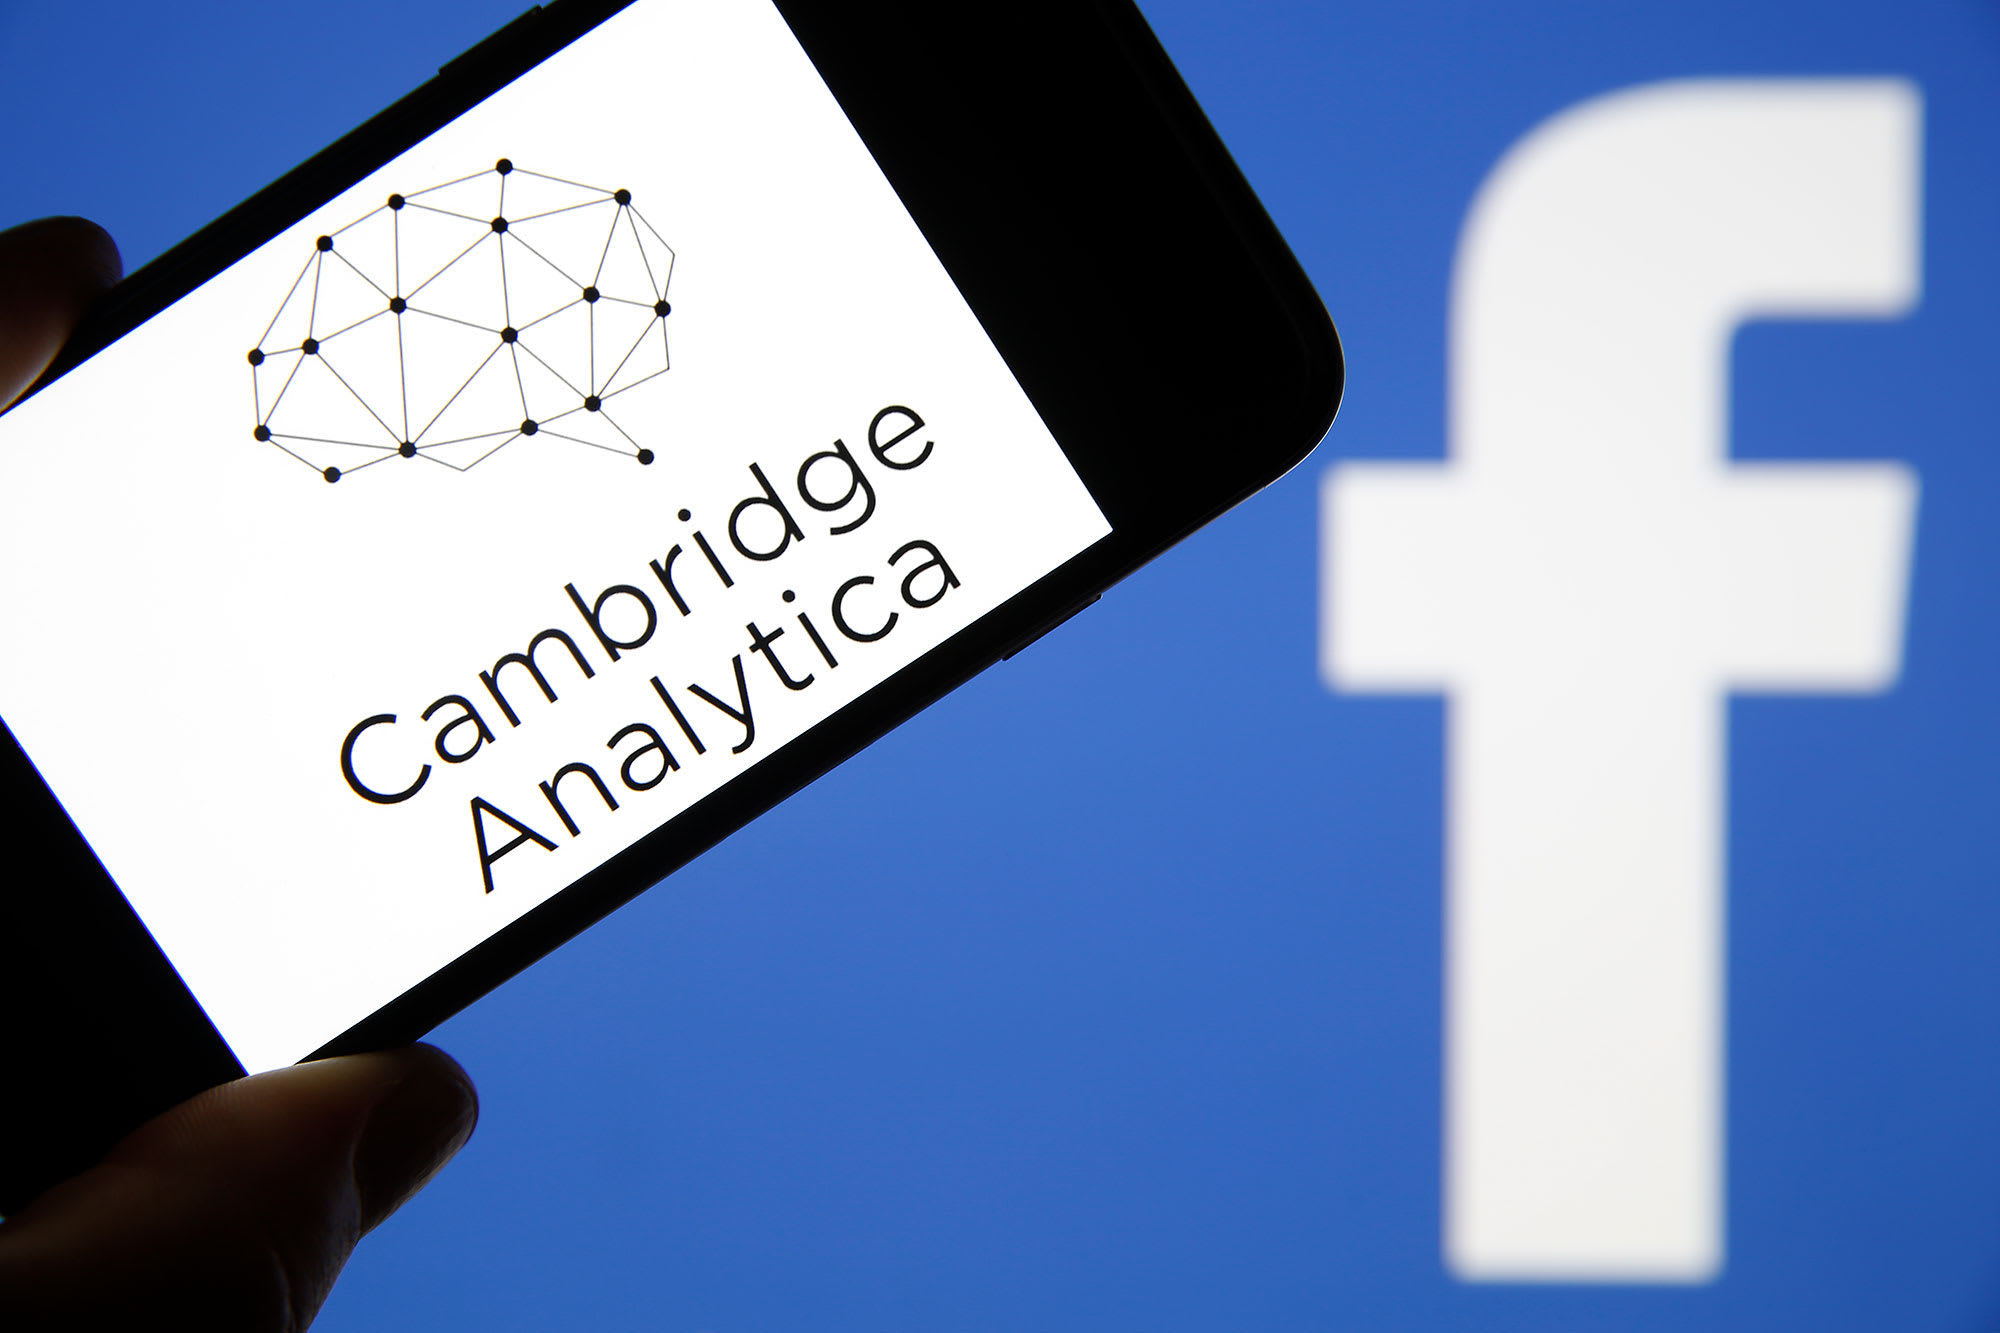 facebook cambridge analytica case study solution